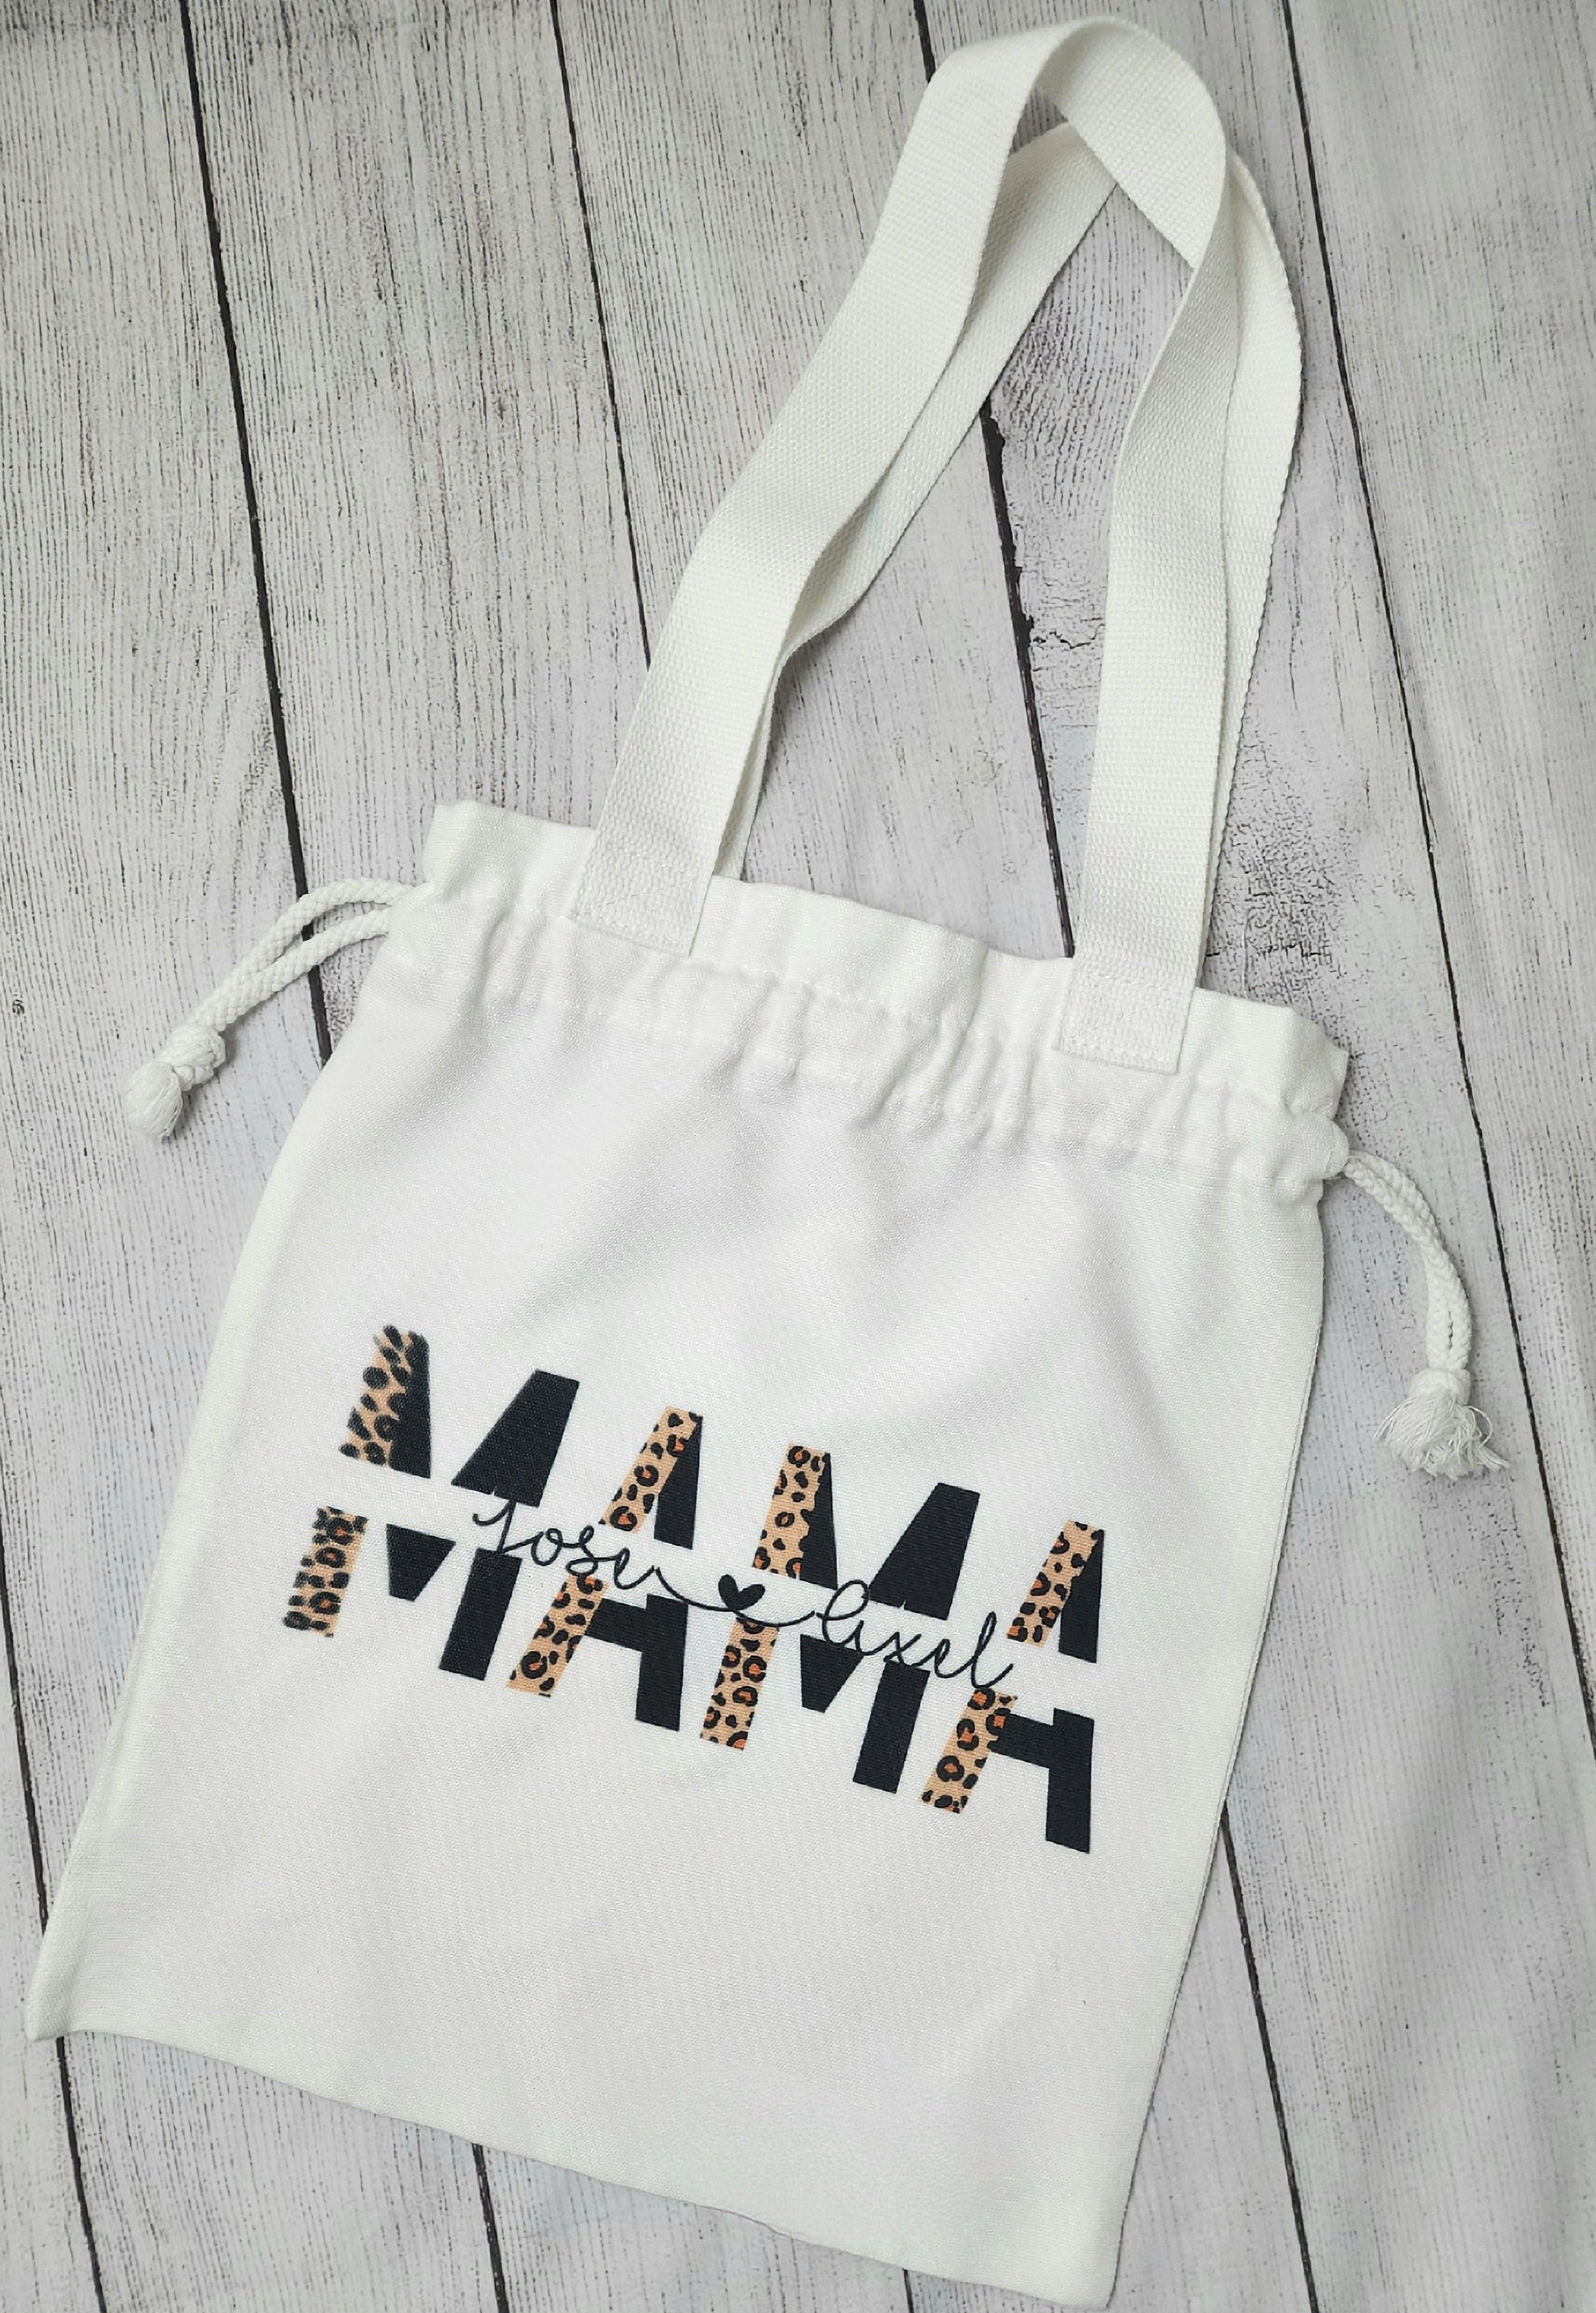 Custom bag with Mama and child's names